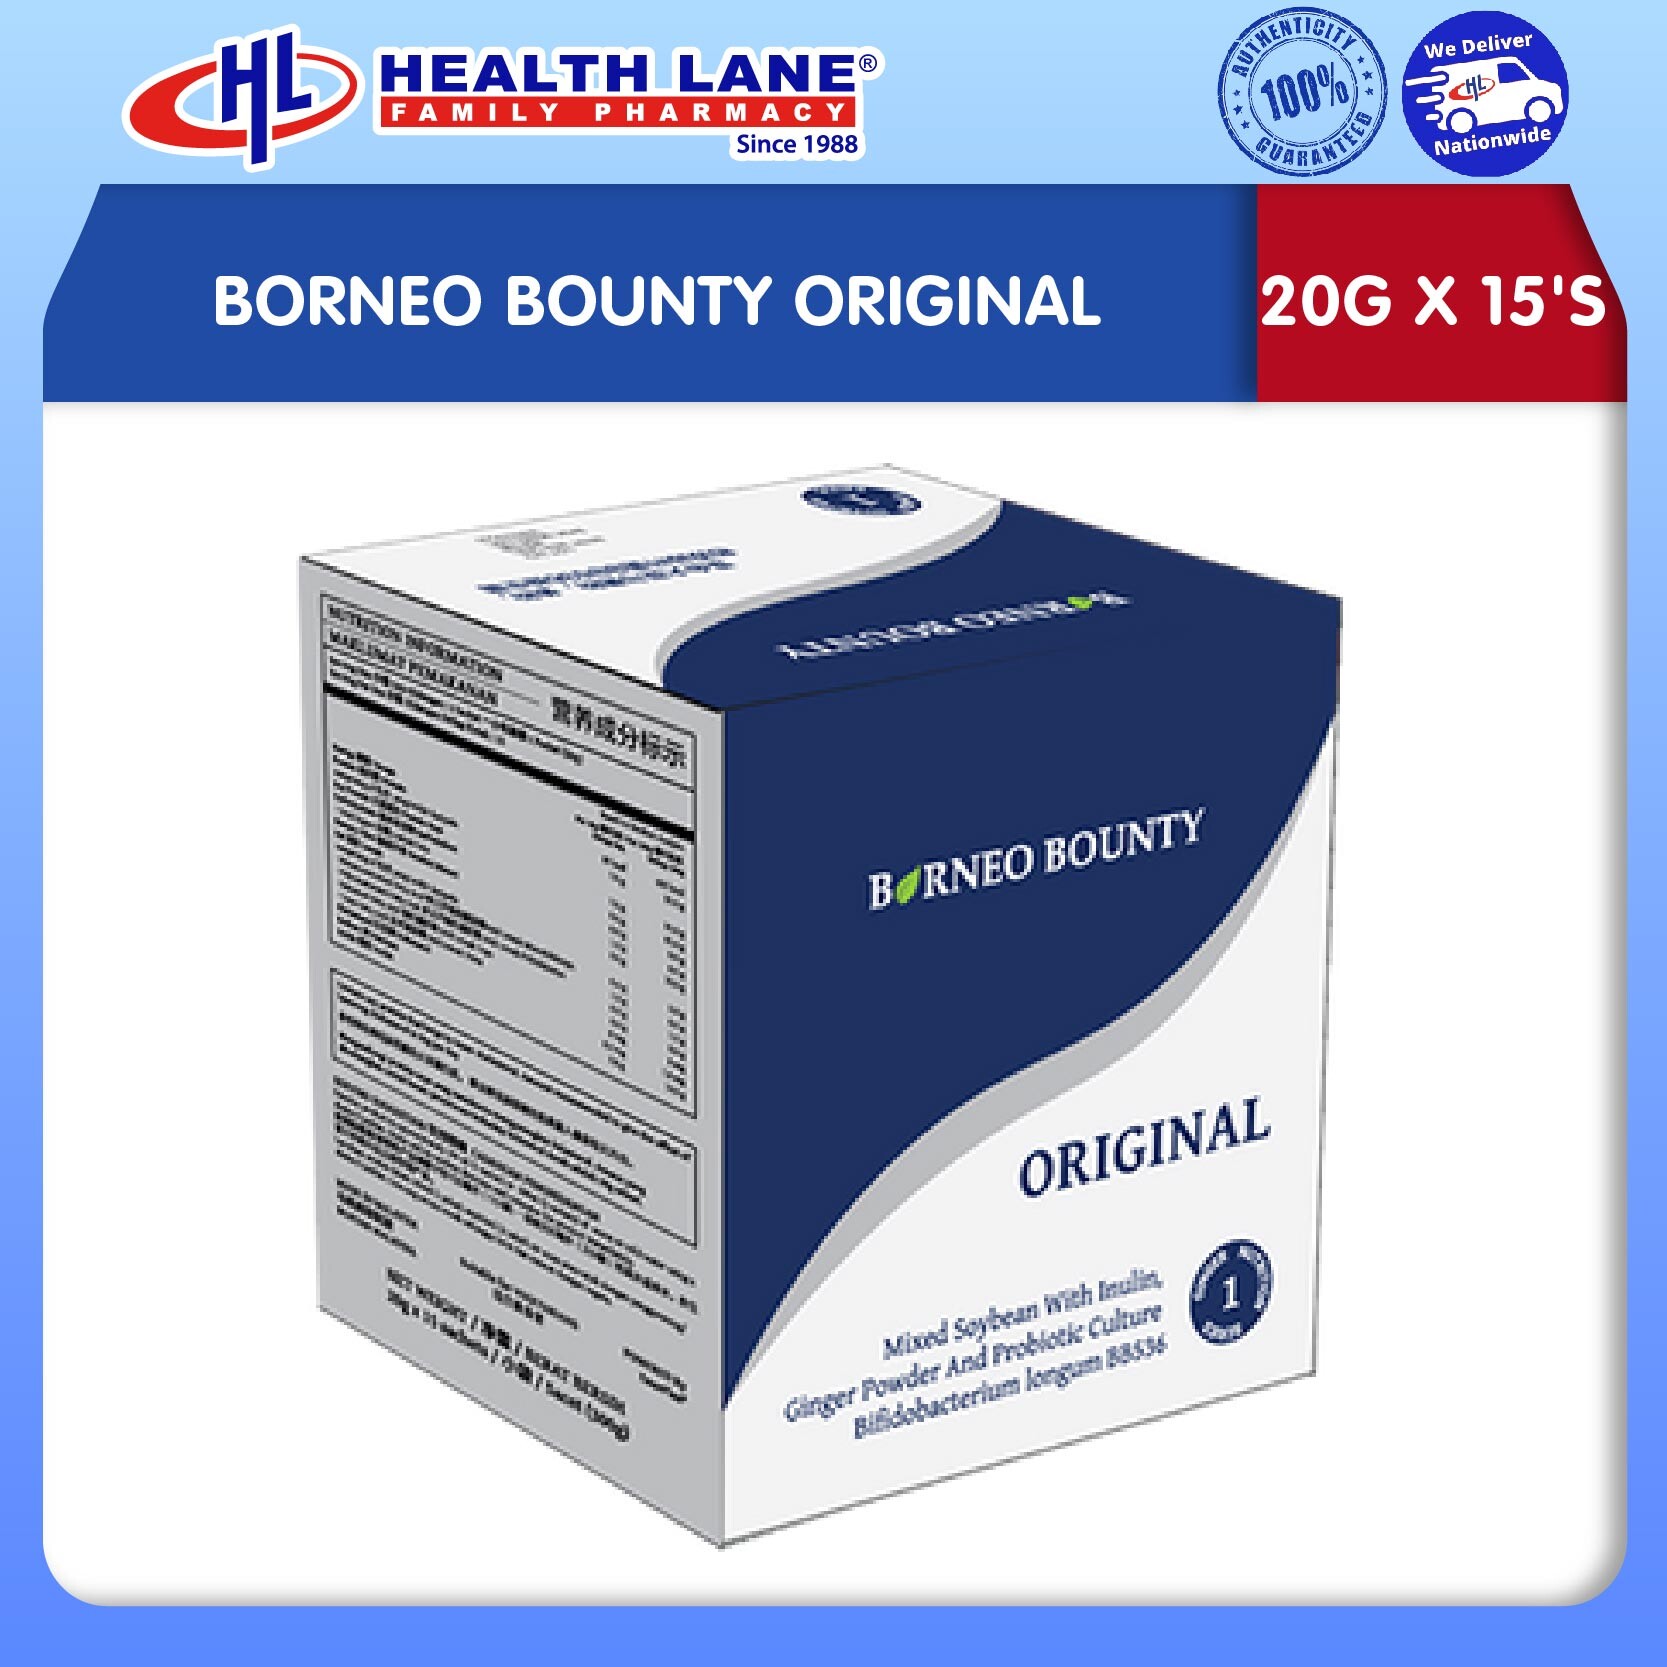 BORNEO BOUNTY ORIGINAL (20G X 15'S)